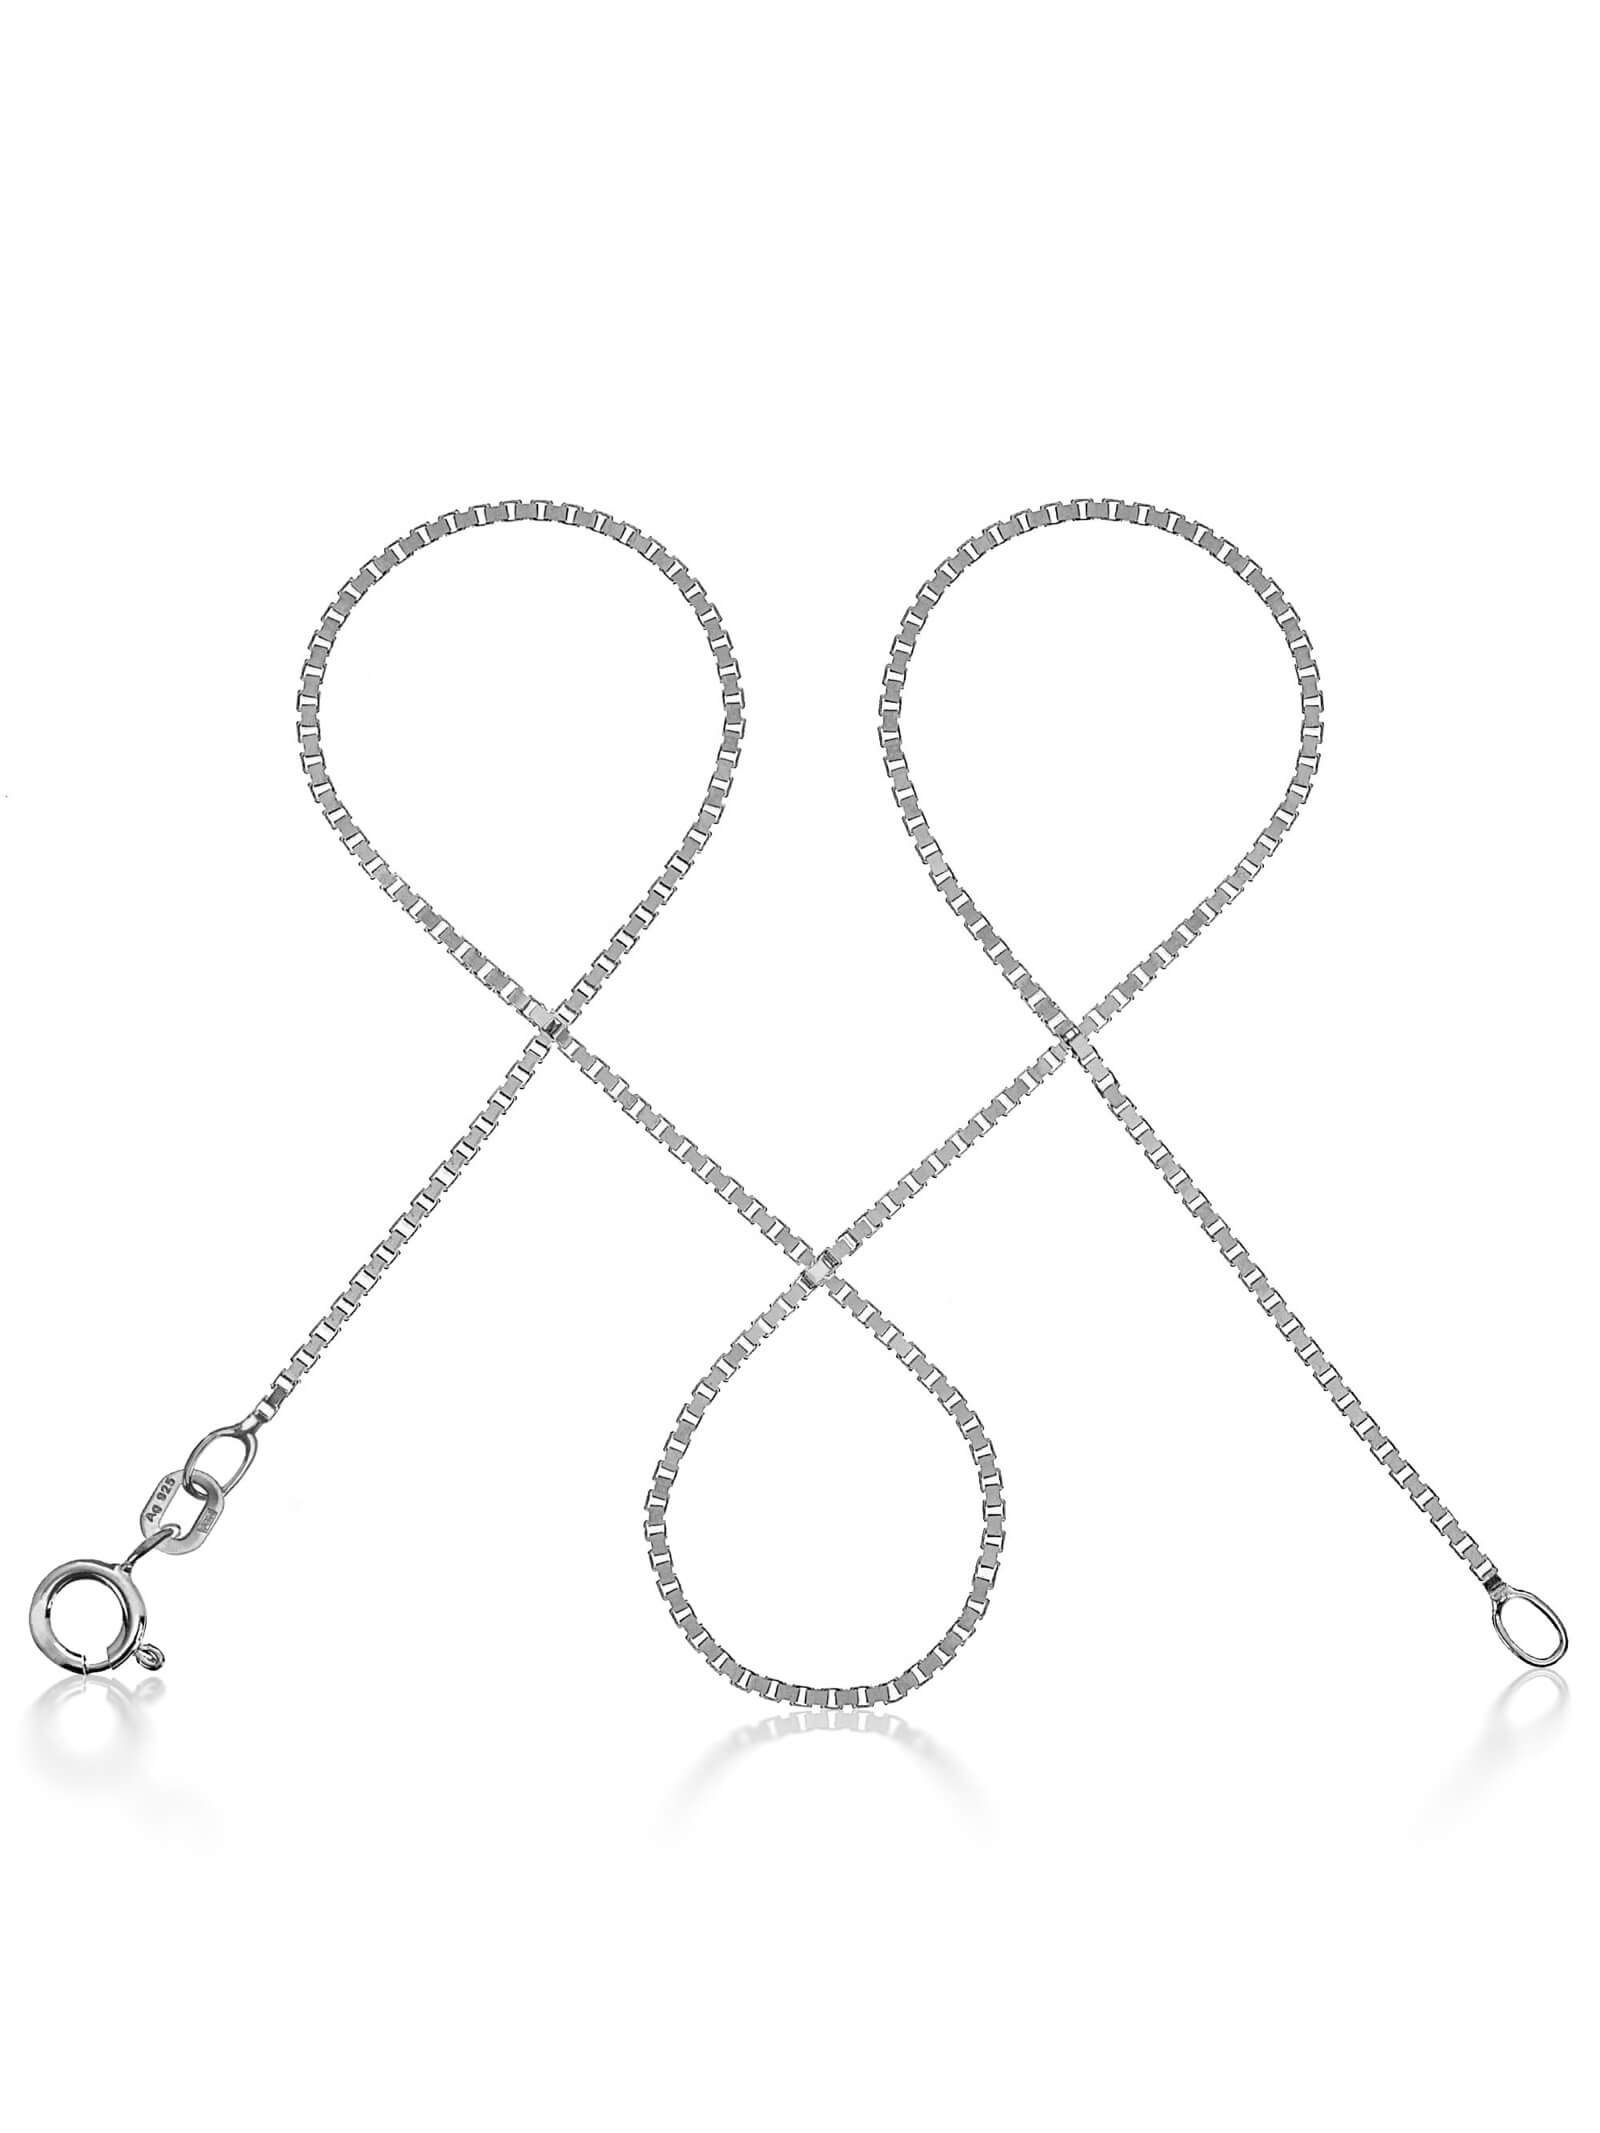 modabilé Kette ohne Anhänger Halskette VENICE, Damen Venezianerkette 1,2mm 42cm, Sterling Silber 925, Made in Germany